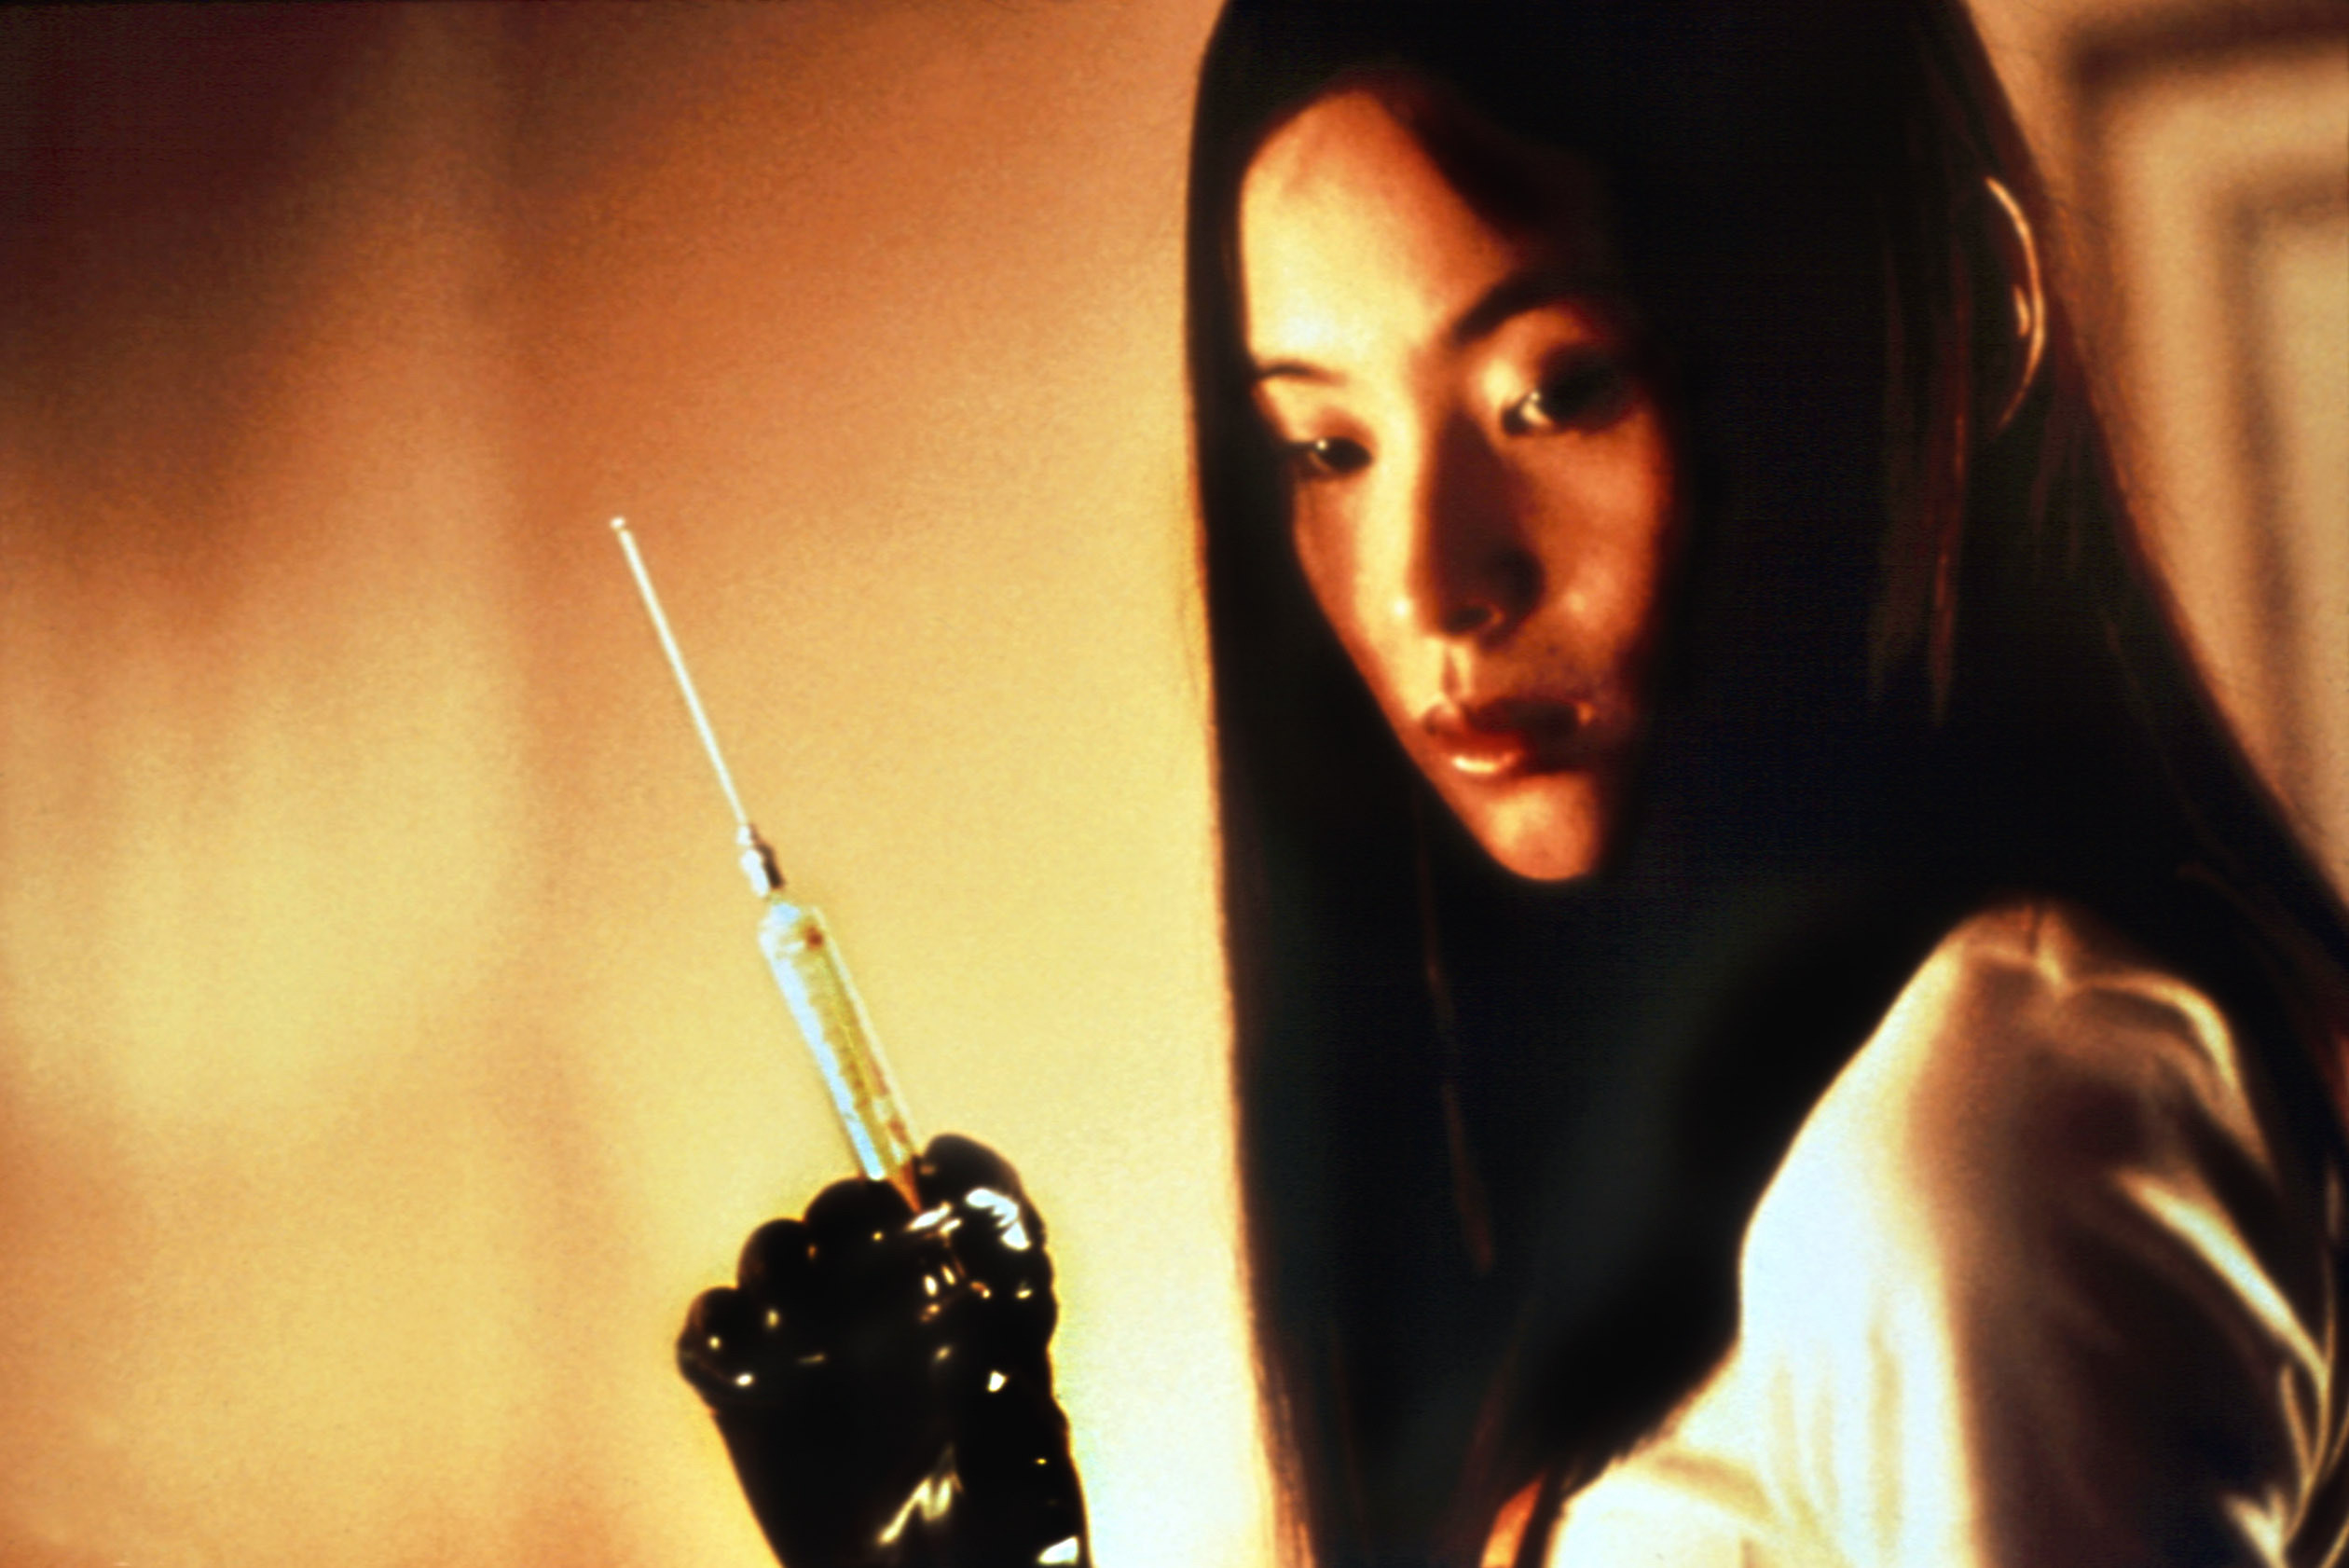 Eihi Shiina with a syringe in audition